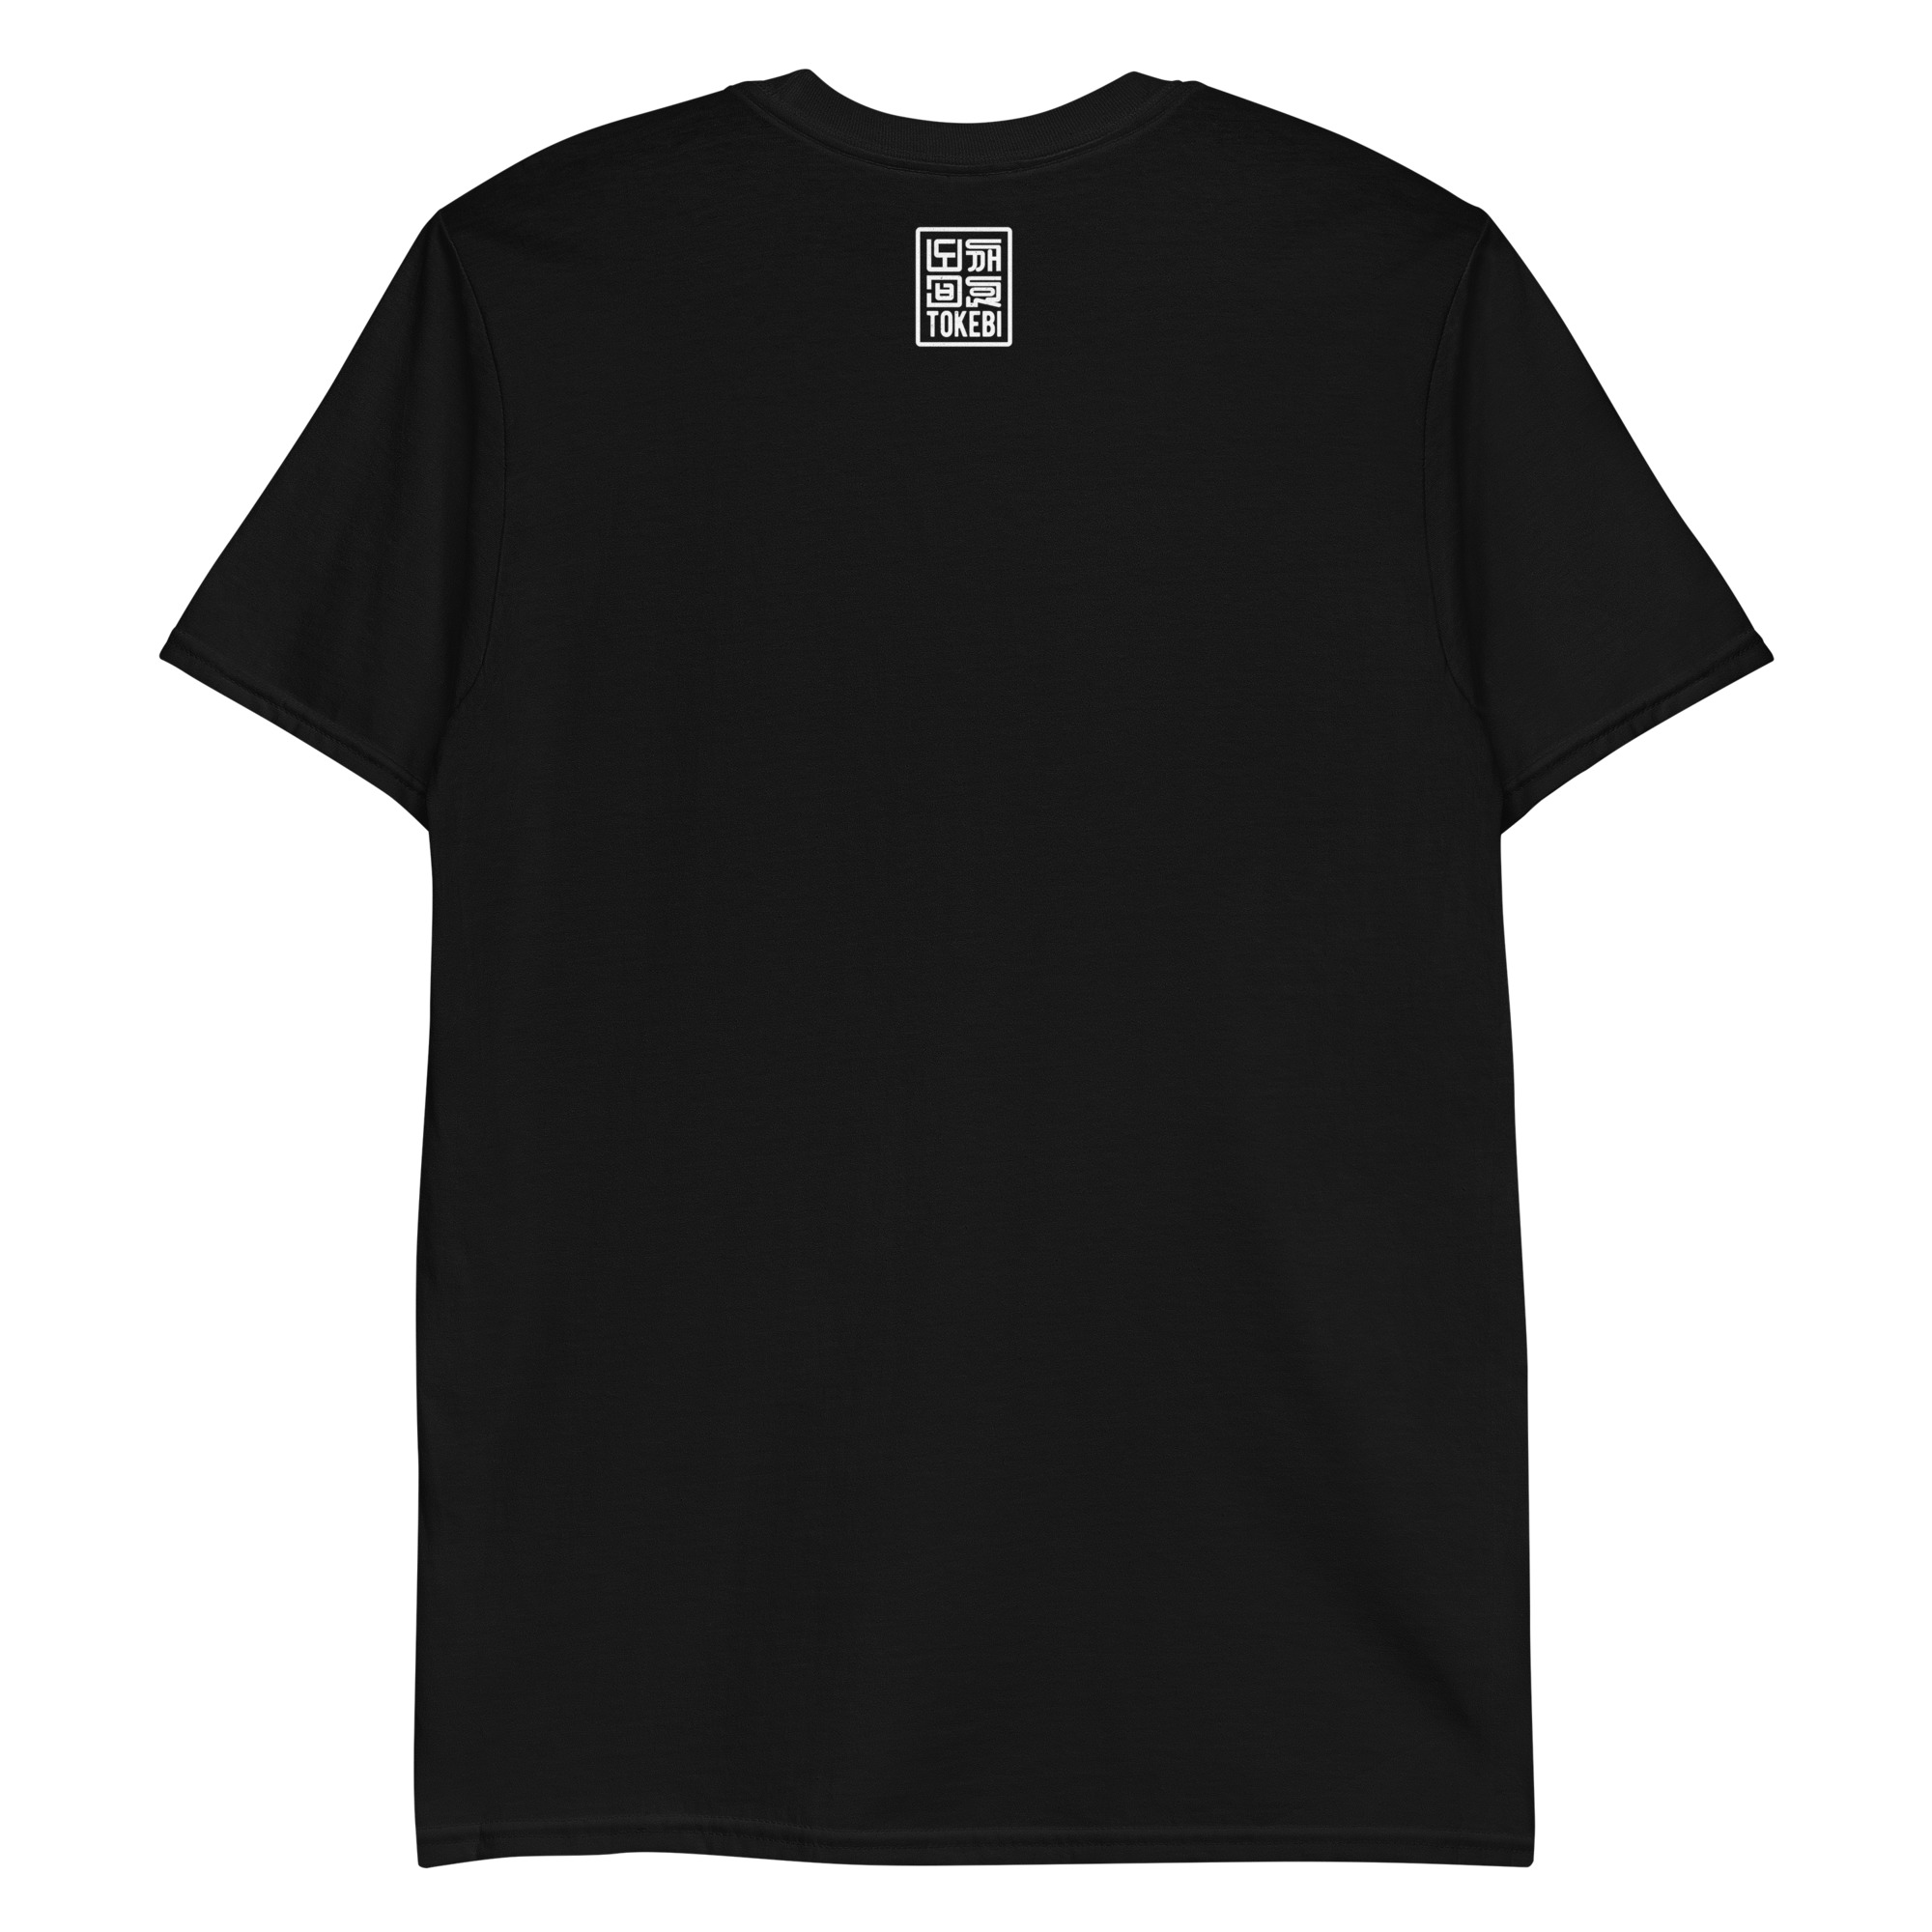 Cyberpunk Short-Sleeve Unisex Skull T-Shirt Black - Tokebi - Skull 